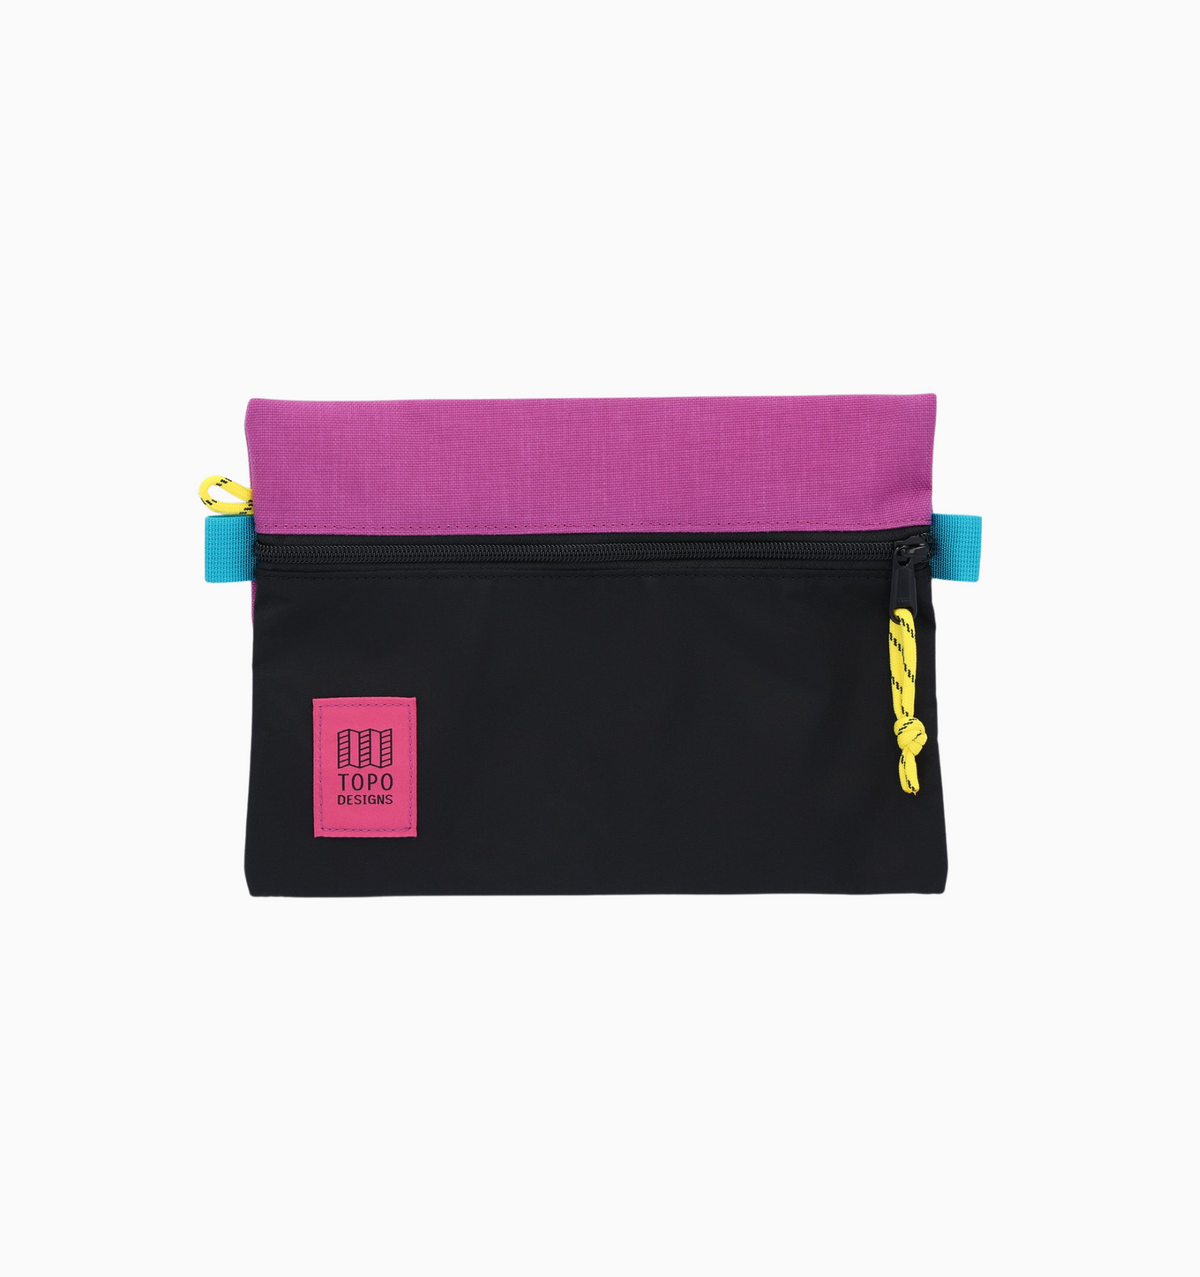 Topo Designs Medium Accessory Bag - Black Grape